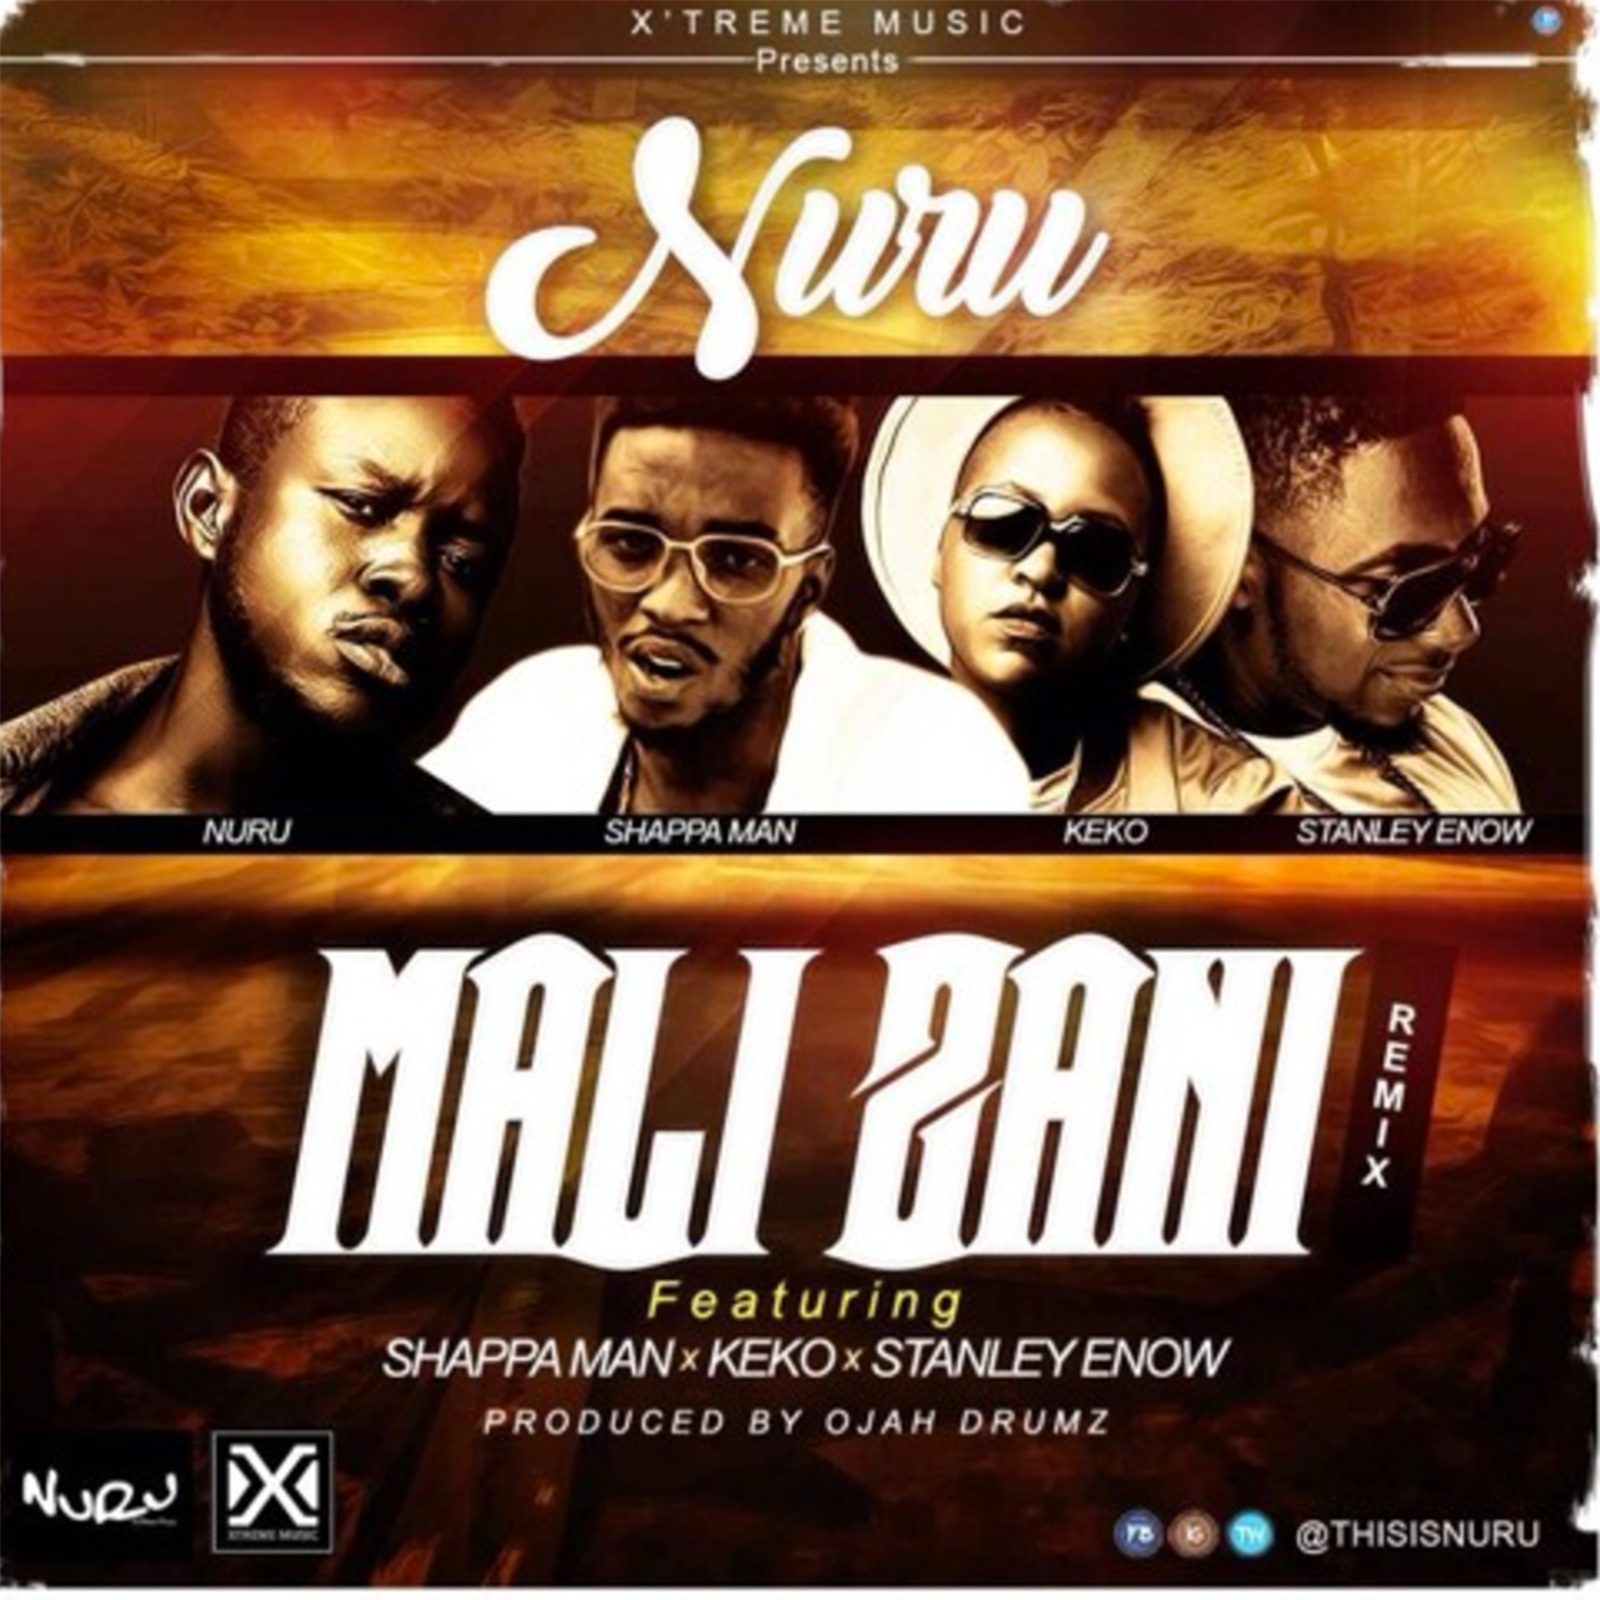 Mali Zani remix by Nuru ft. ShappaMan, Keko & Stanley Enow